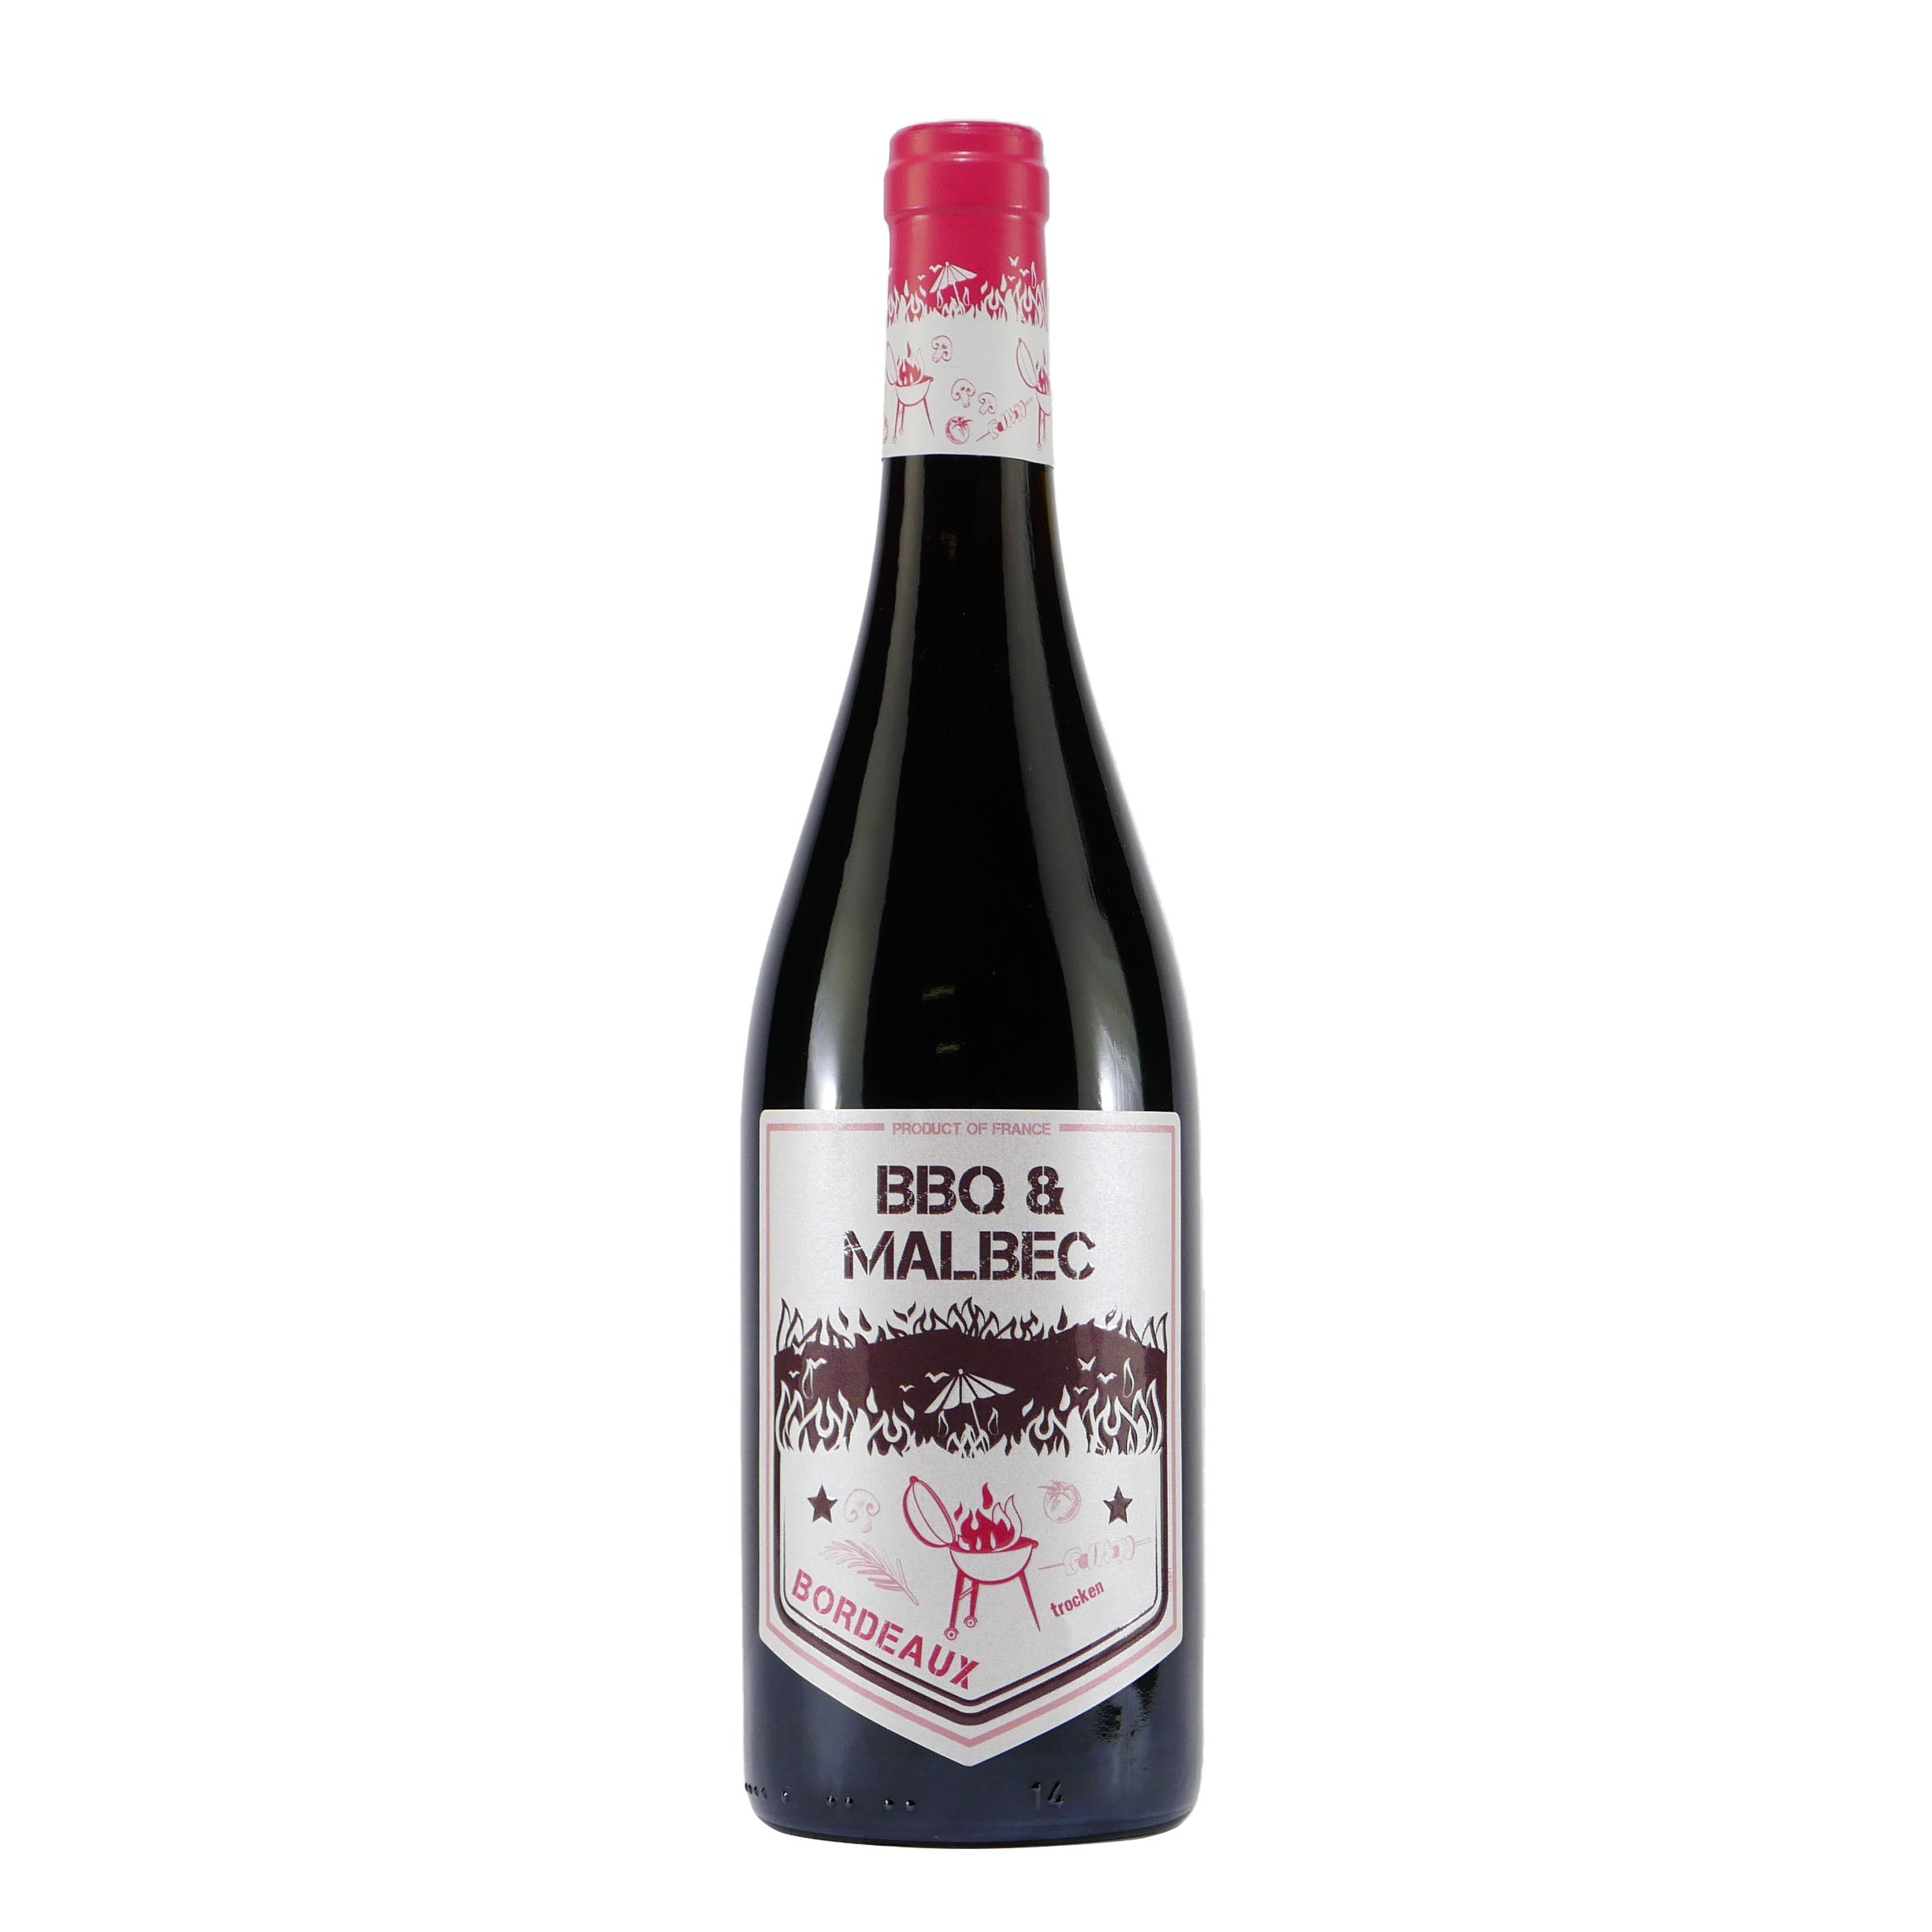 BBQ & Malbec Bordeaux AOP -trocken- Perfekte Kombination für Grillabende